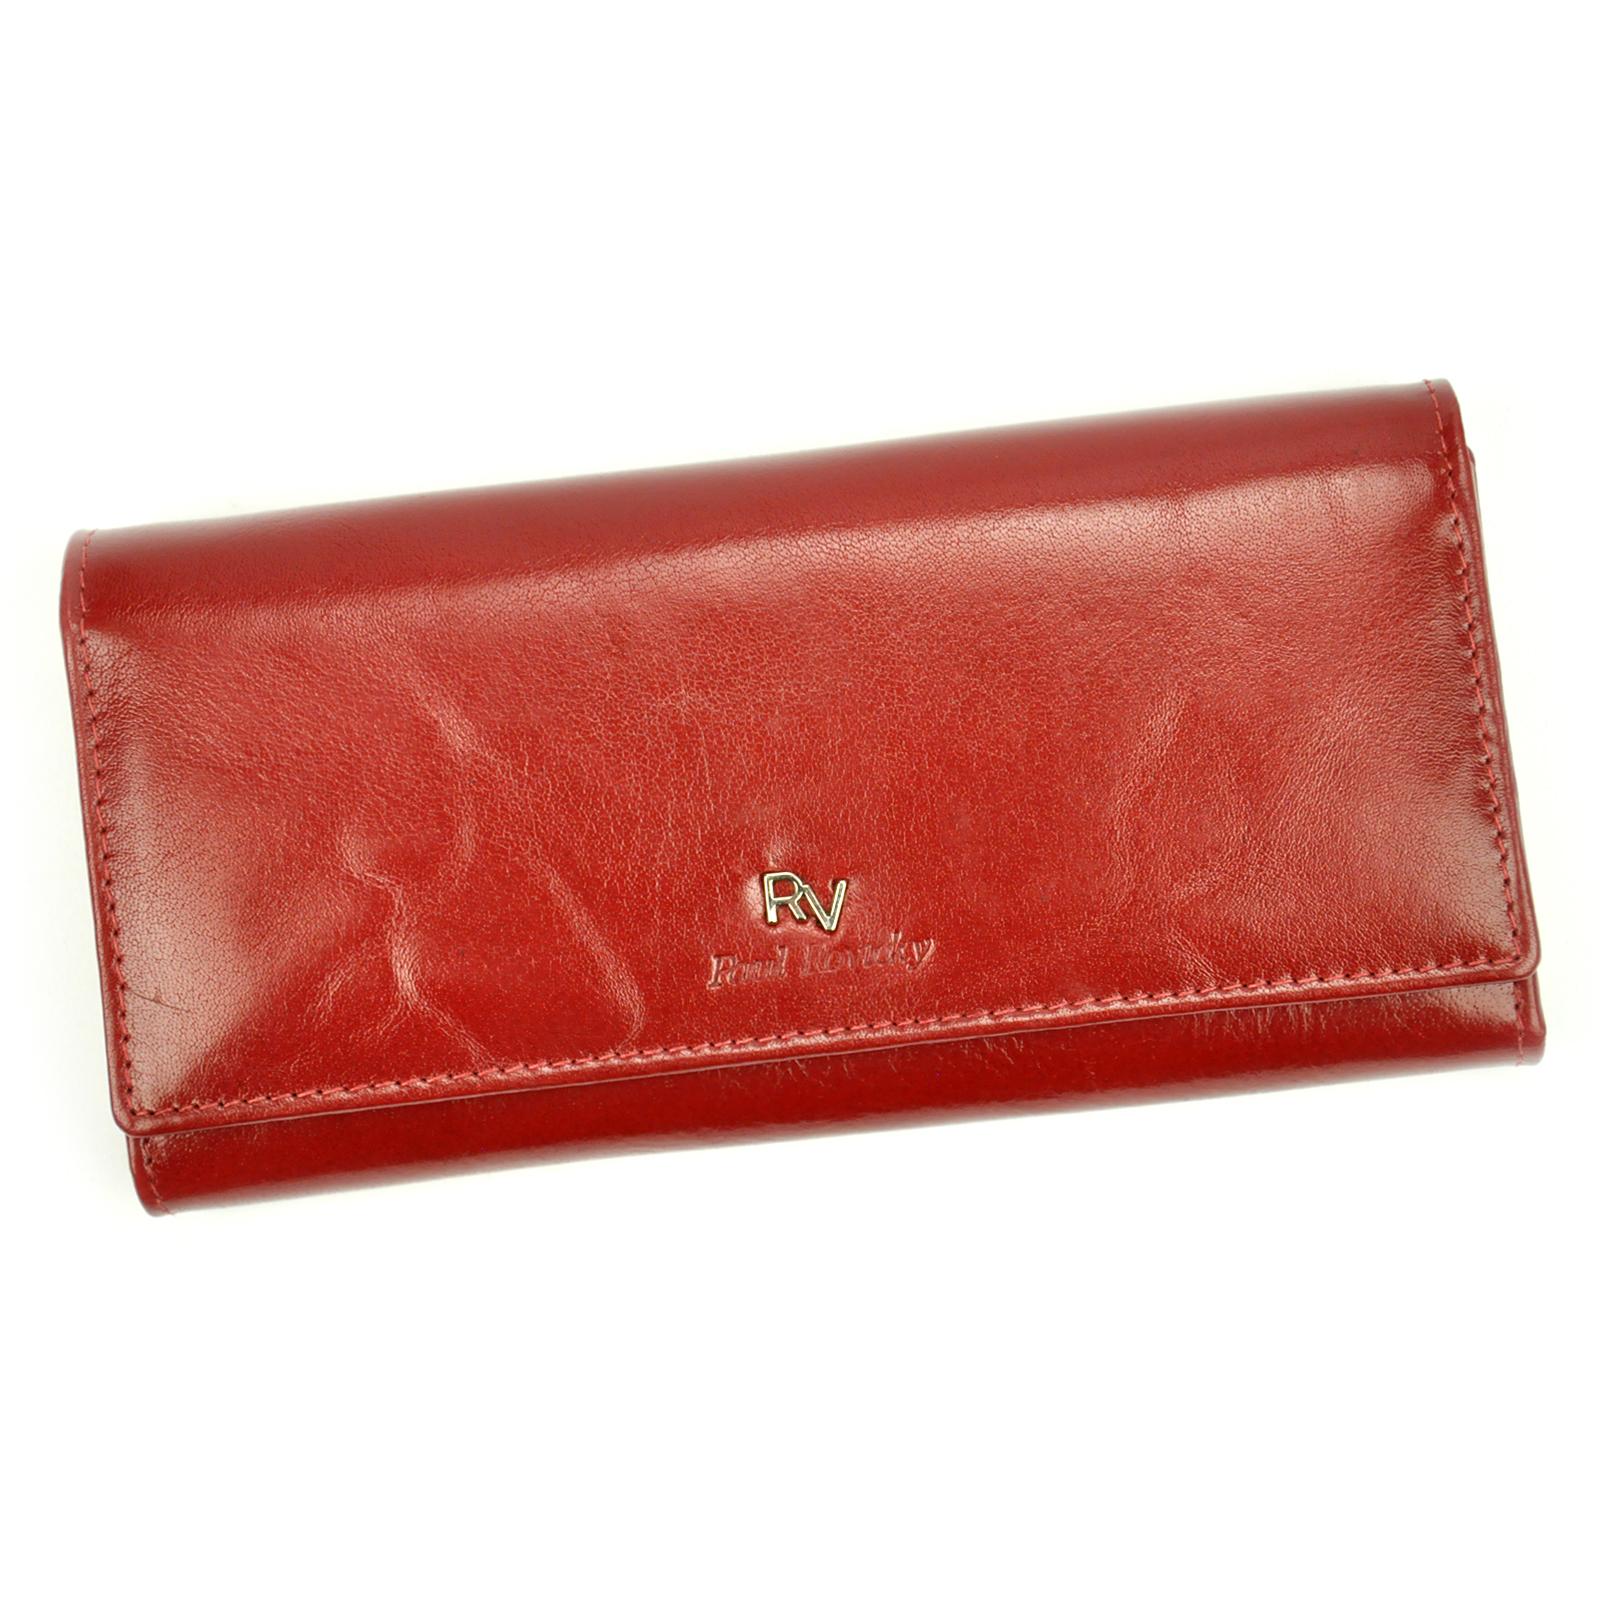 Tmavěčervená kožená peněženka Rovicky 7680155-9